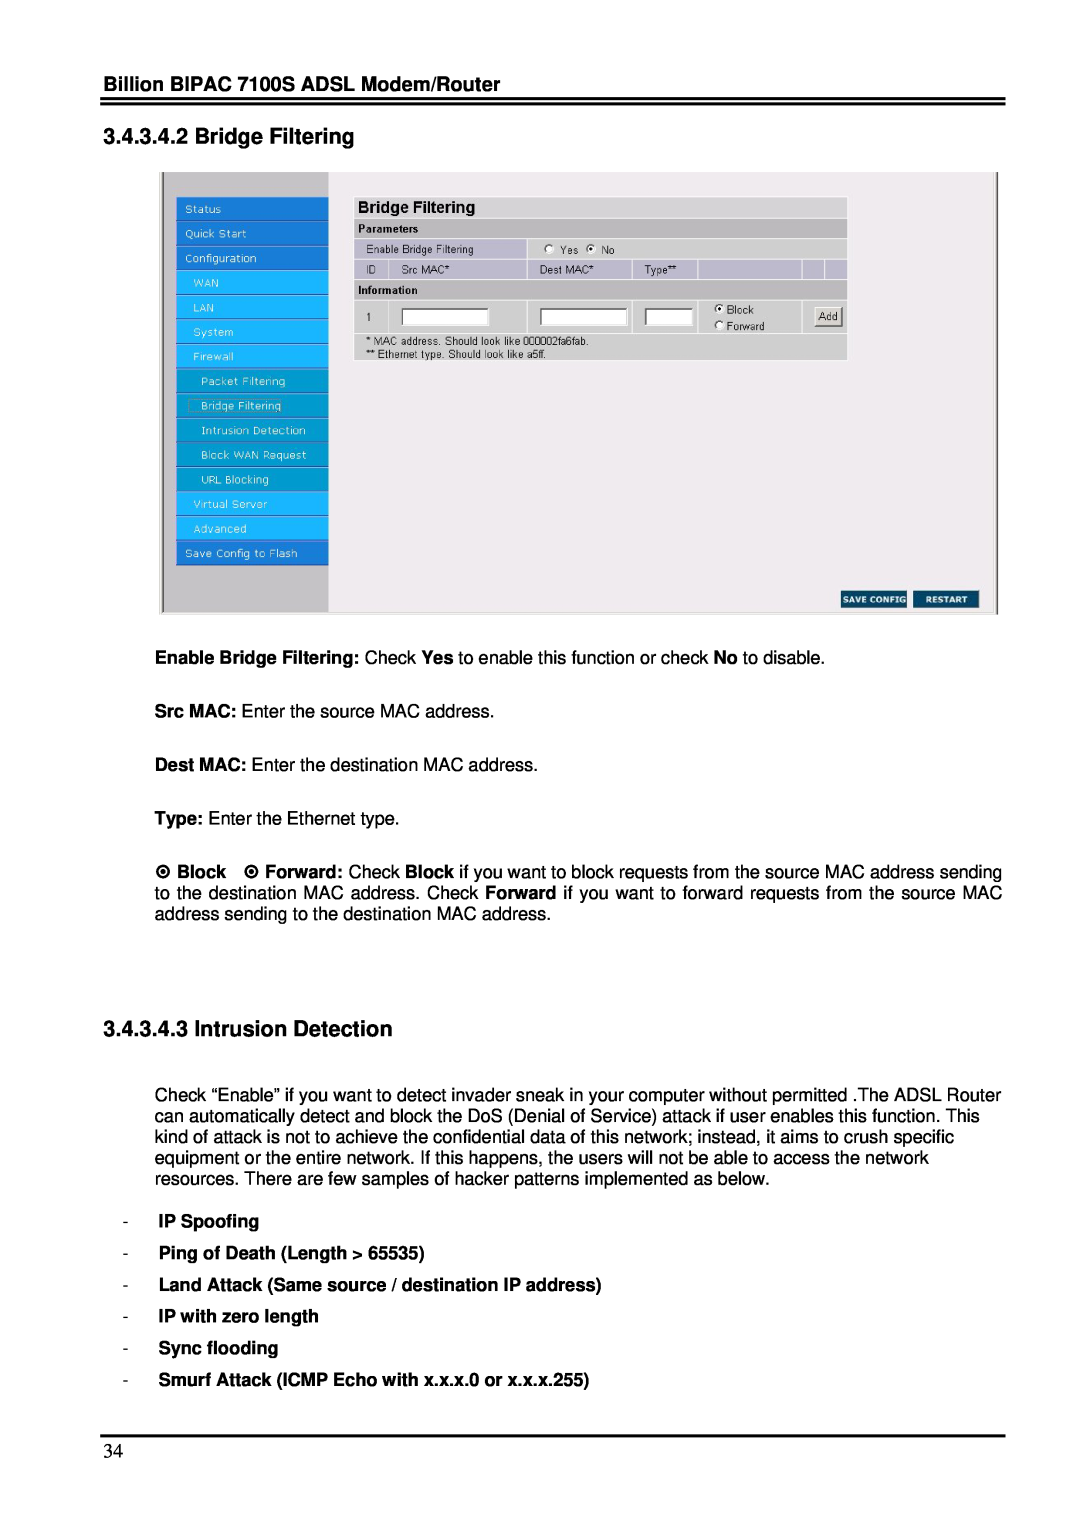 Billion Electric Company user manual Bridge Filtering, Intrusion Detection, Billion BIPAC 7100S ADSL Modem/Router 